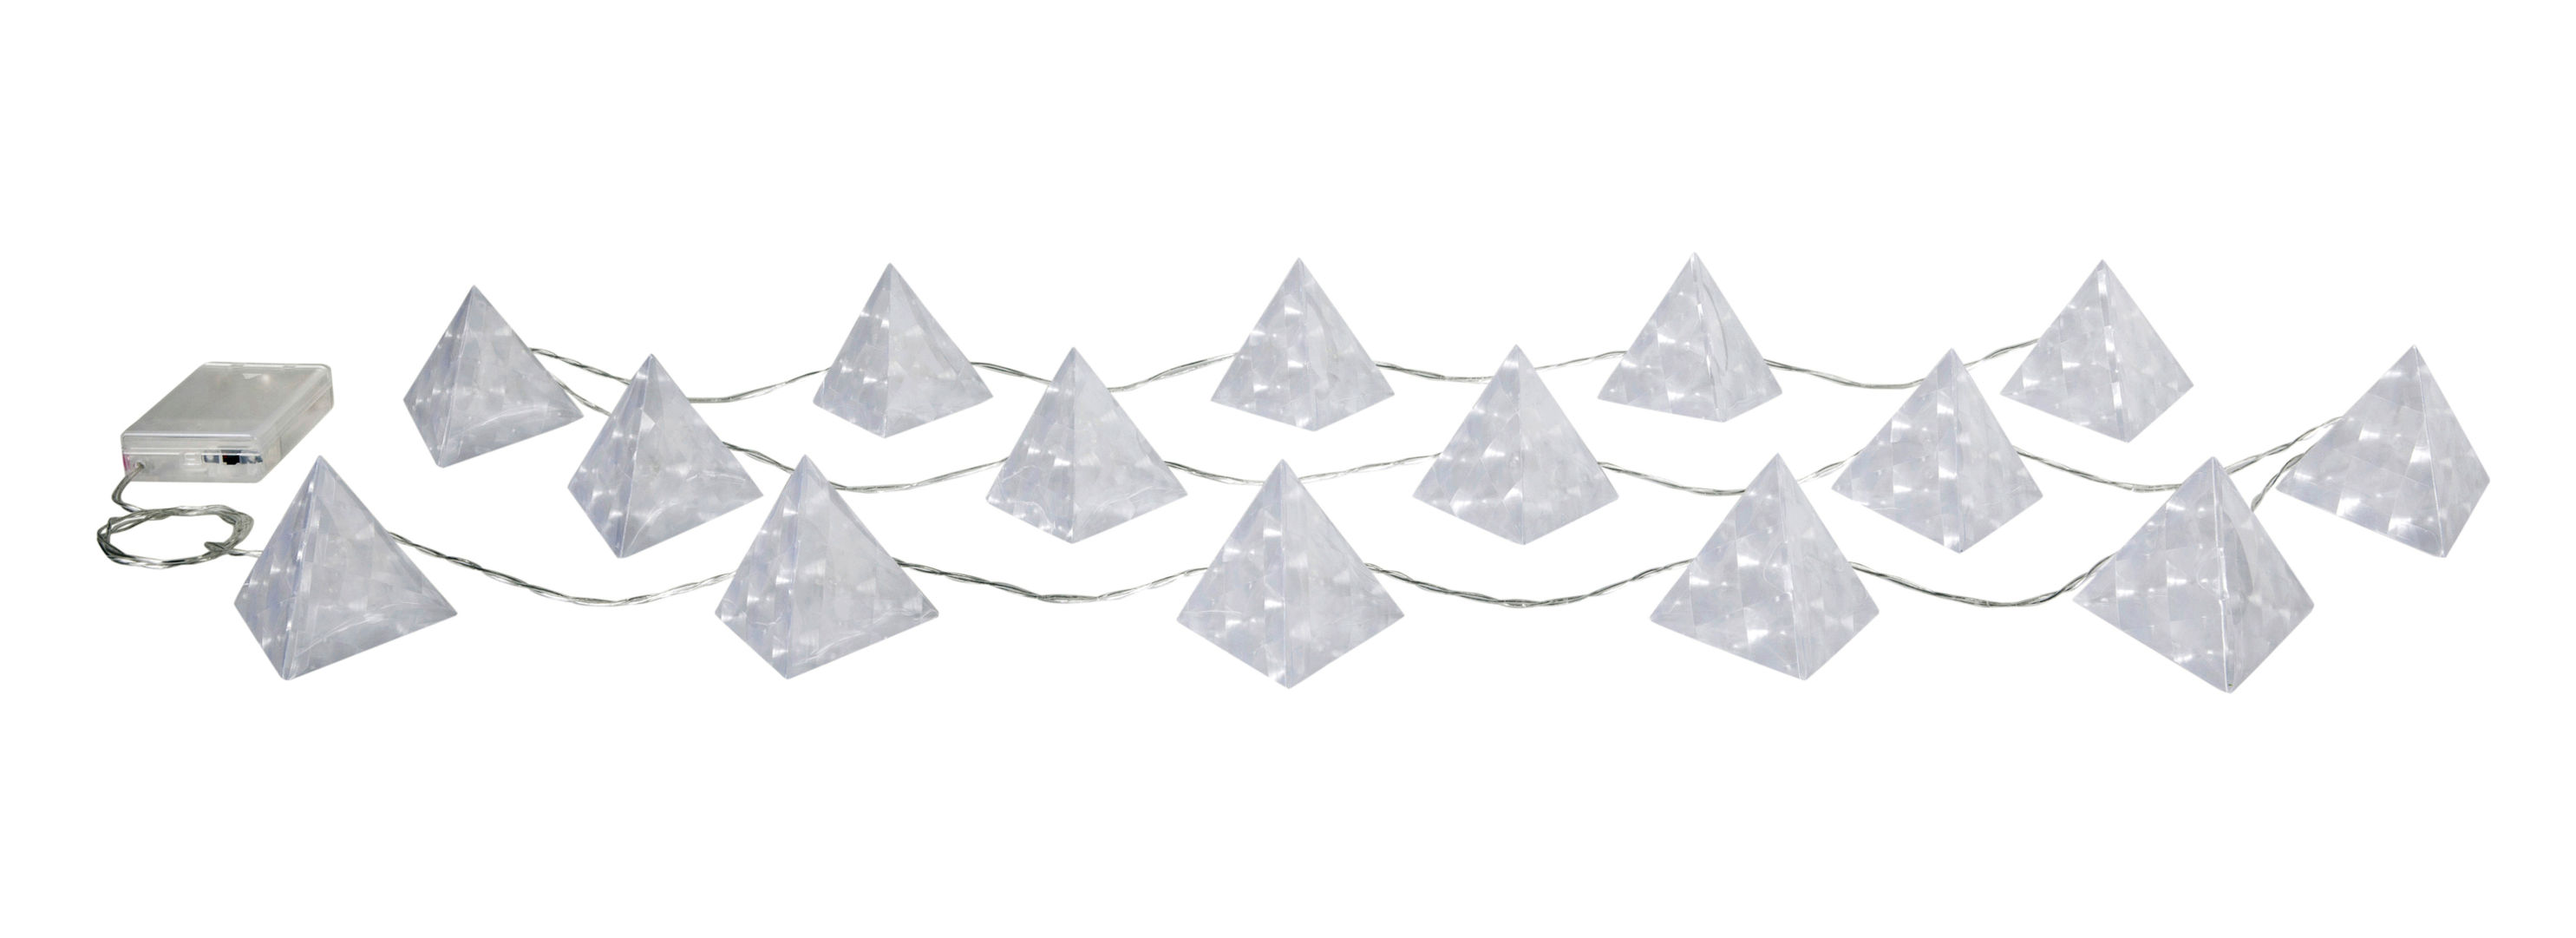 LED-Lichterkette Pyramiden jetzt bei Weltbild.de bestellen